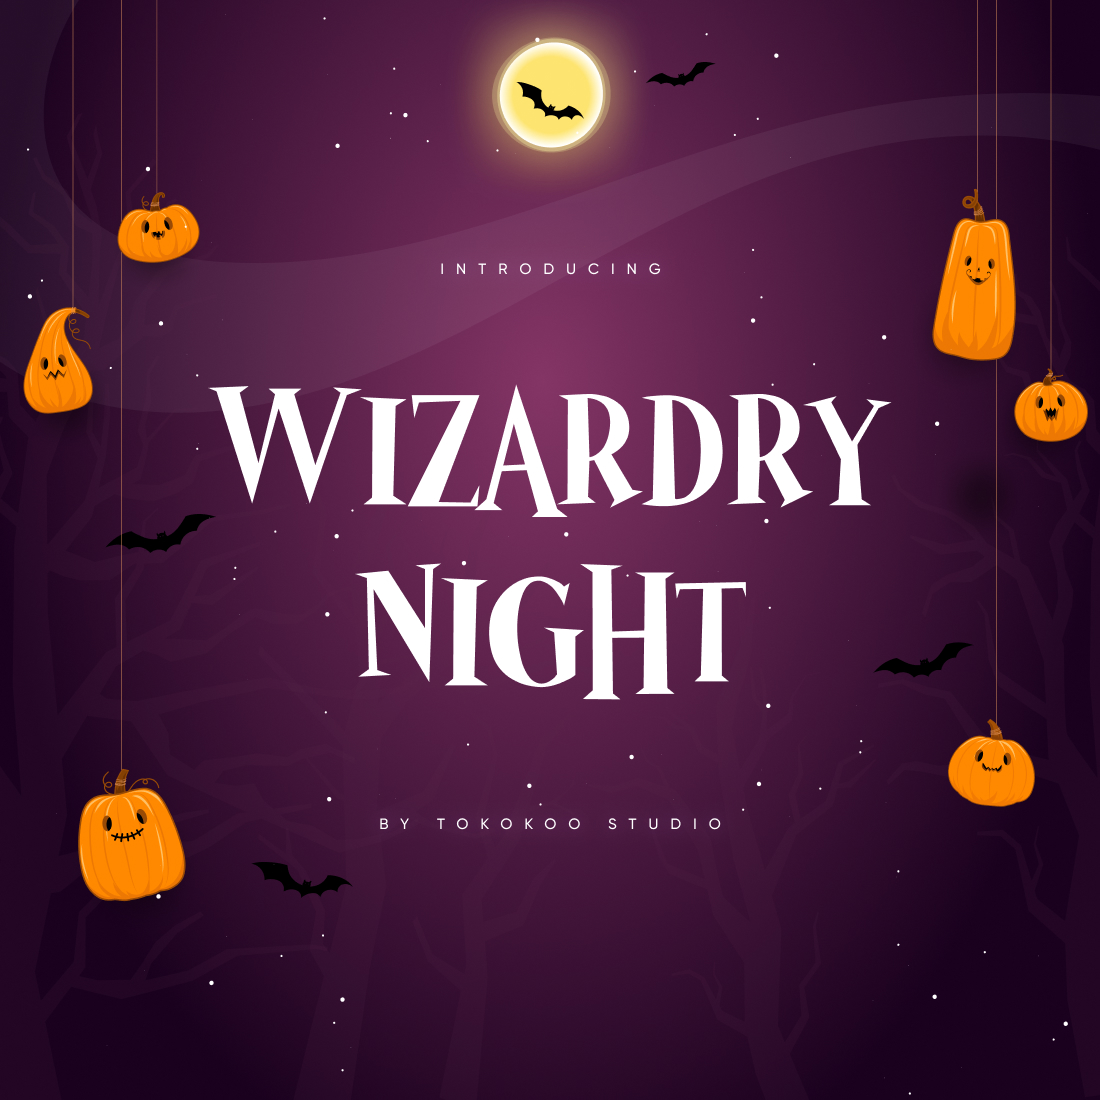 Wizardry Night Free Font MasterBundles Main Cover.